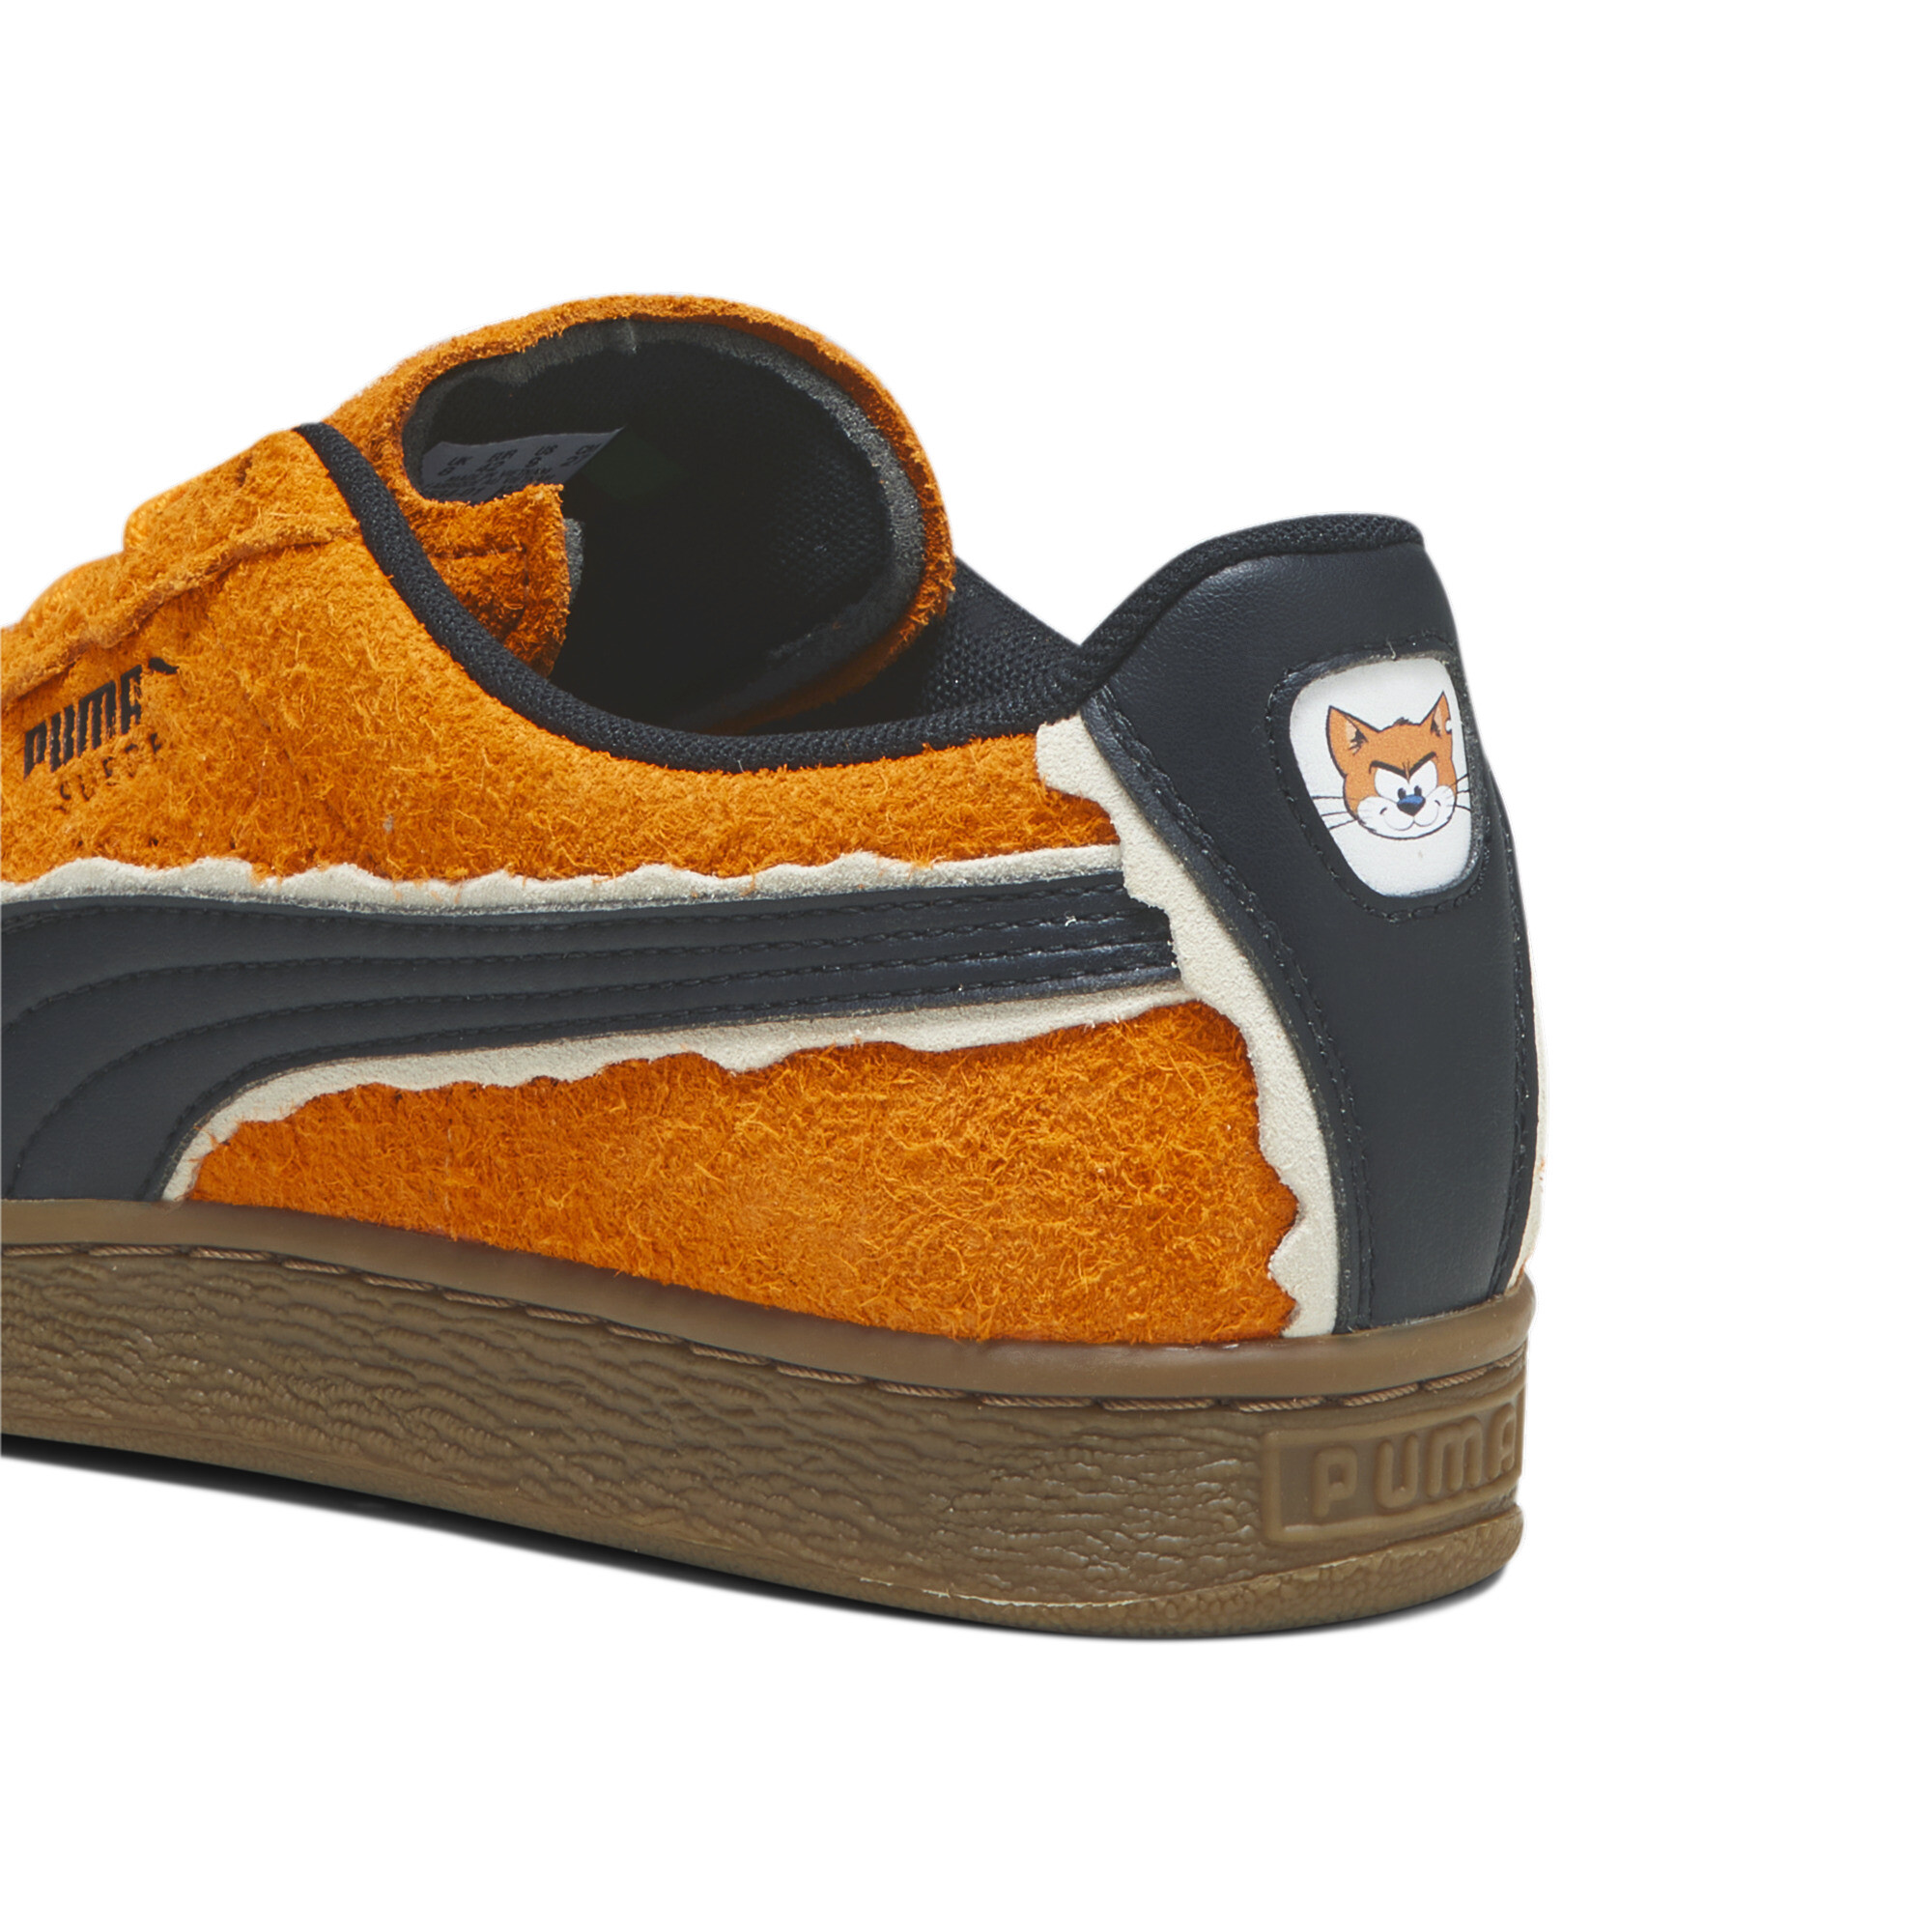 Men's PUMA X THE SMURFS Suede Sneakers In Orange, Size EU 46